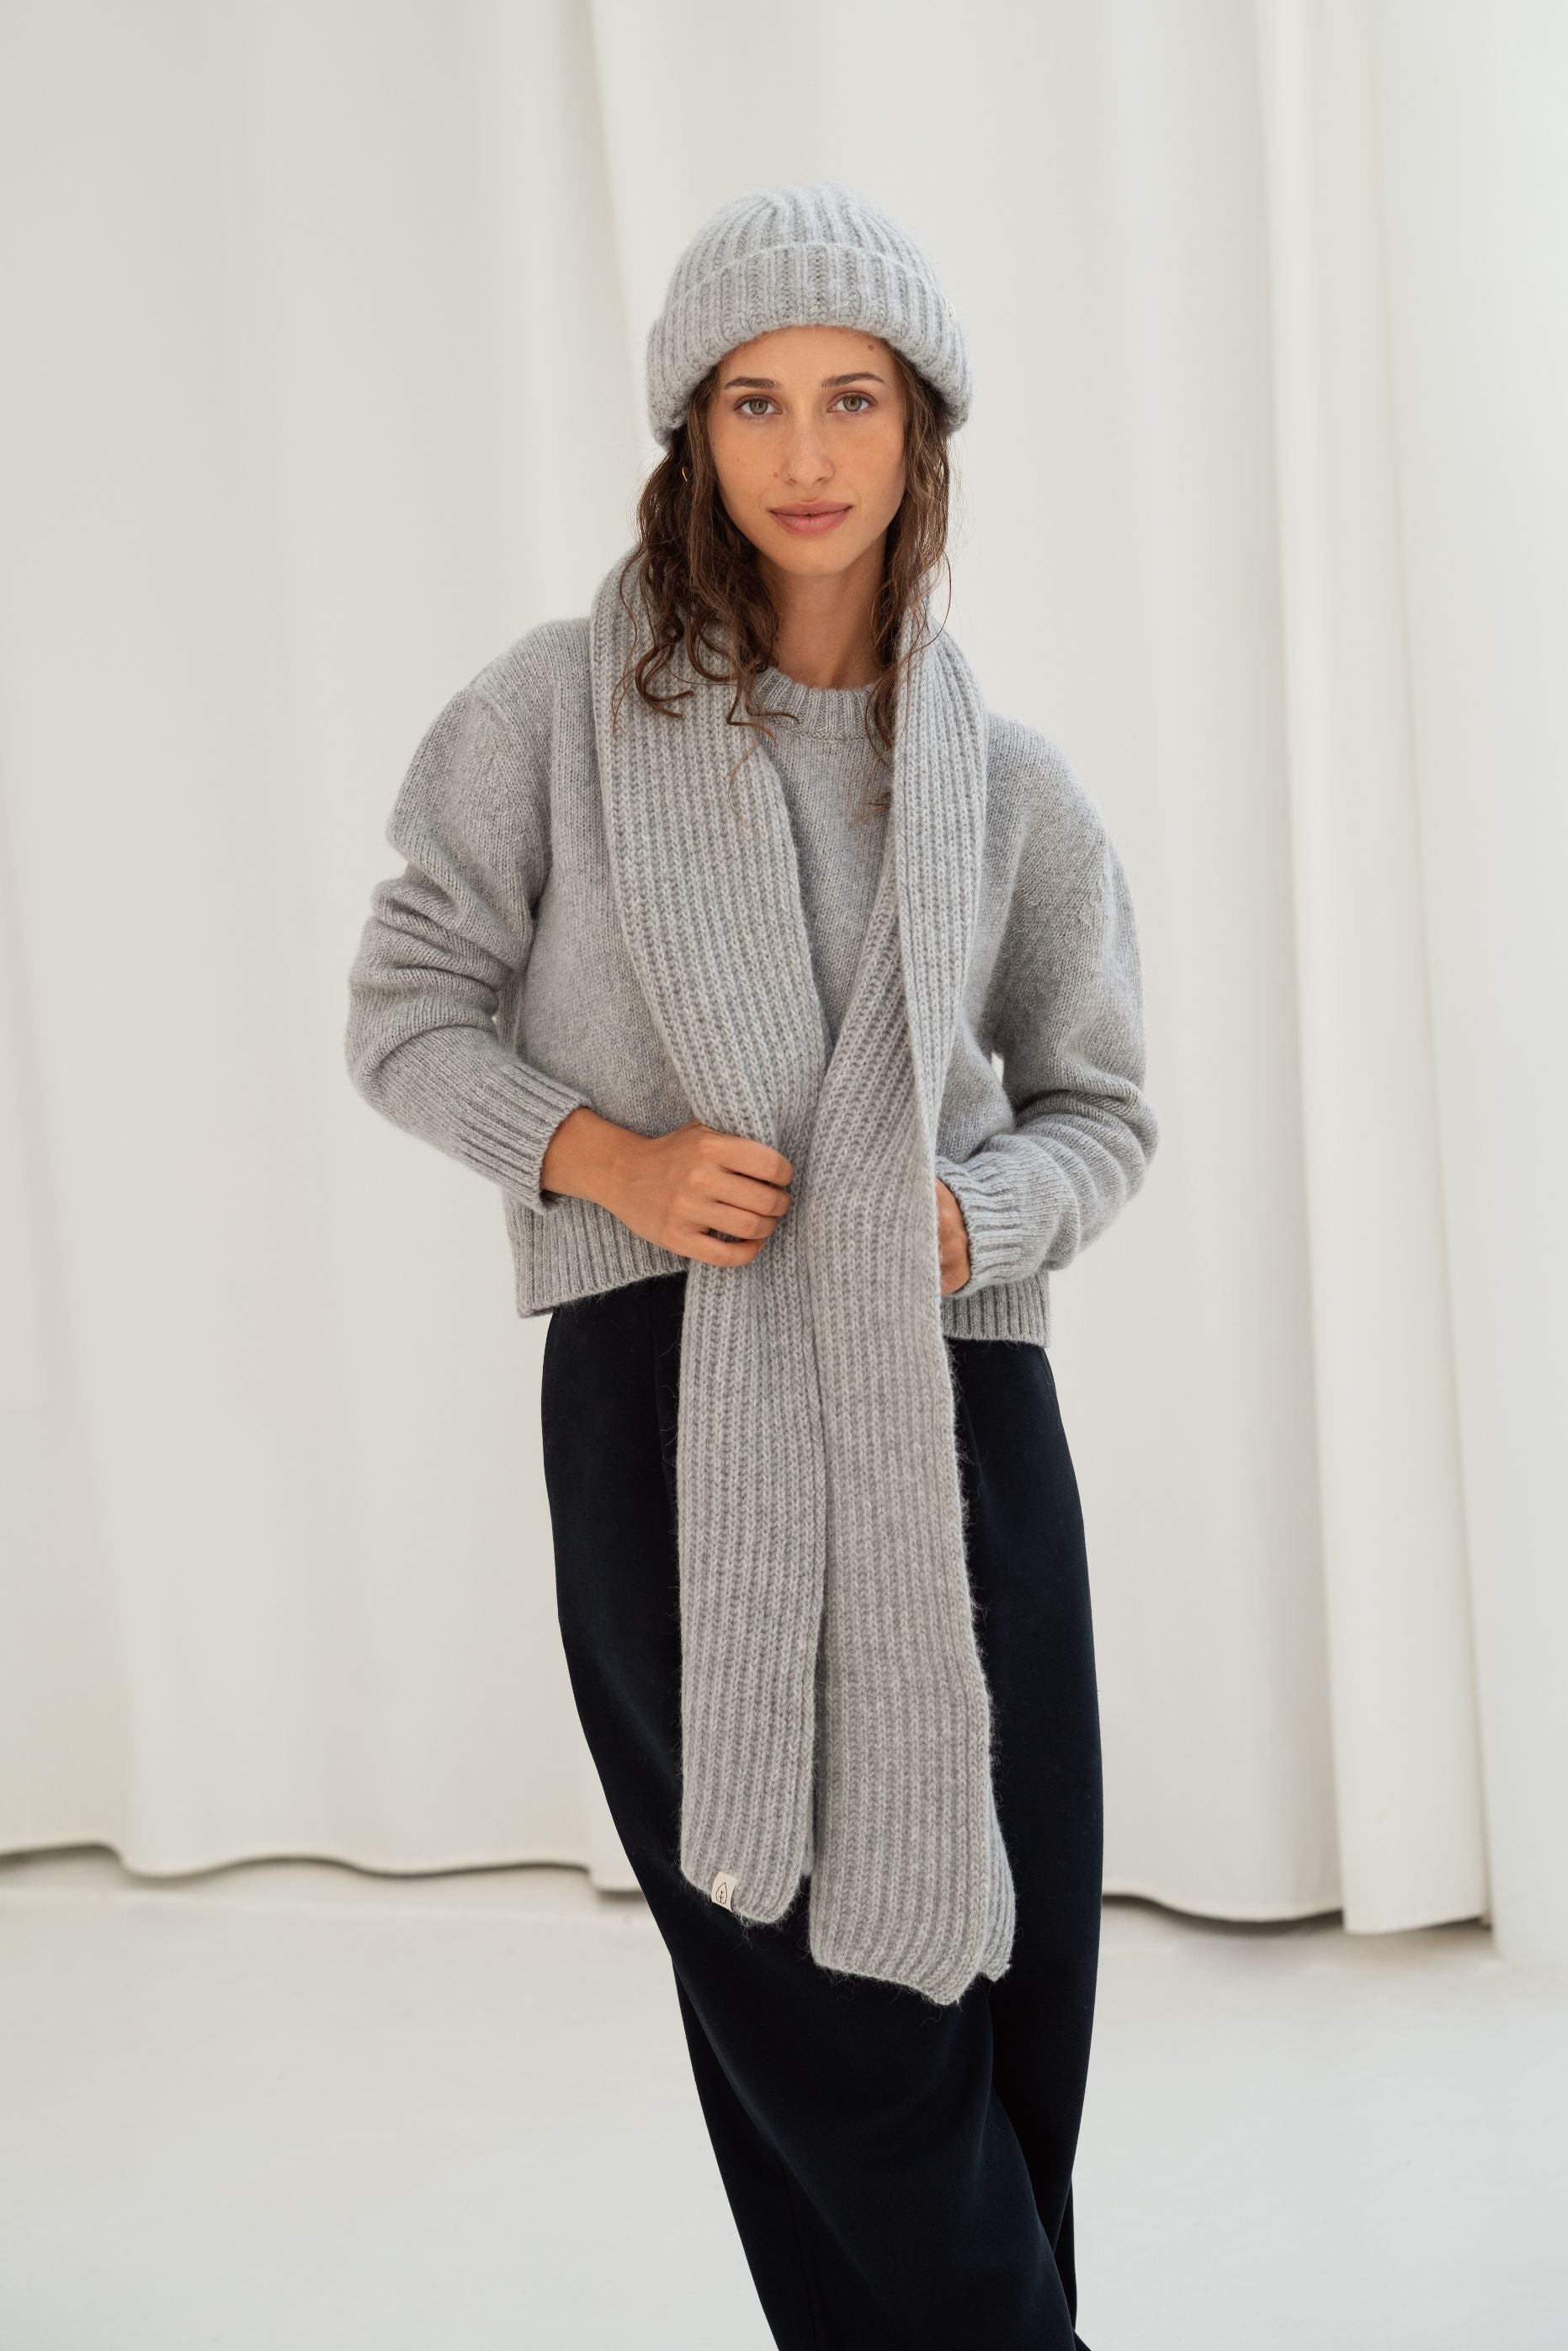 naz winter scarf recycled wool grey